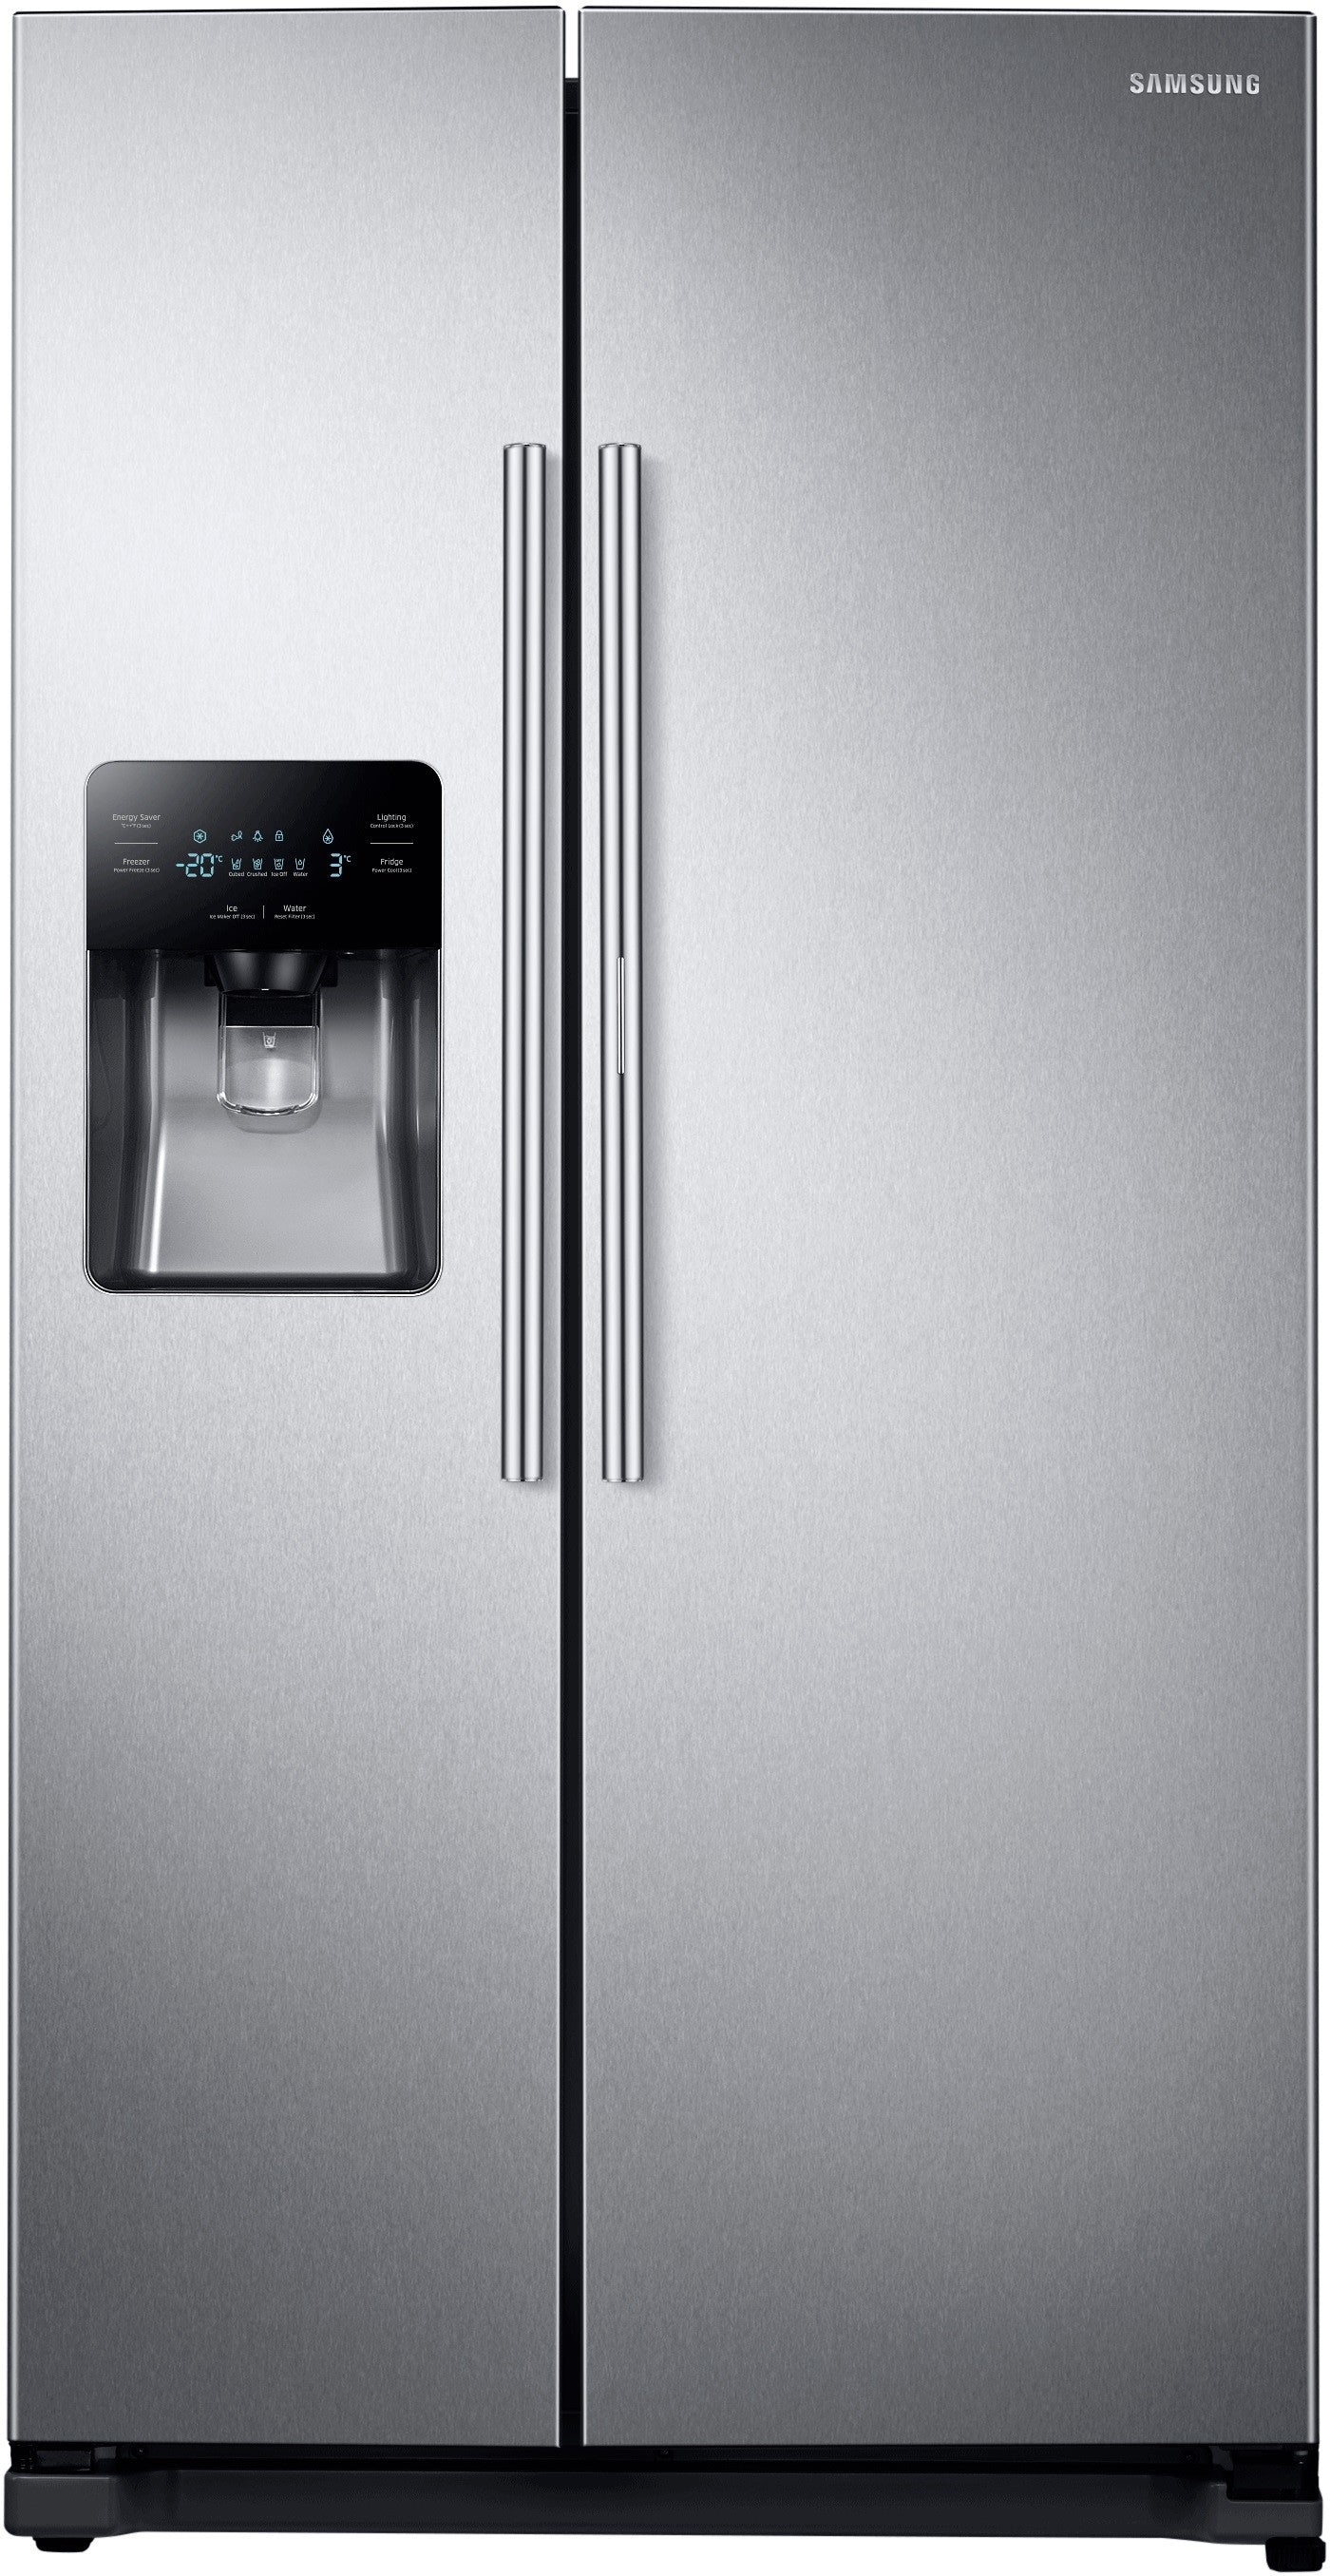 Samsung RH25H5611SR/AA 24.7 Cu. Ft. Side-by-side Refrigerator